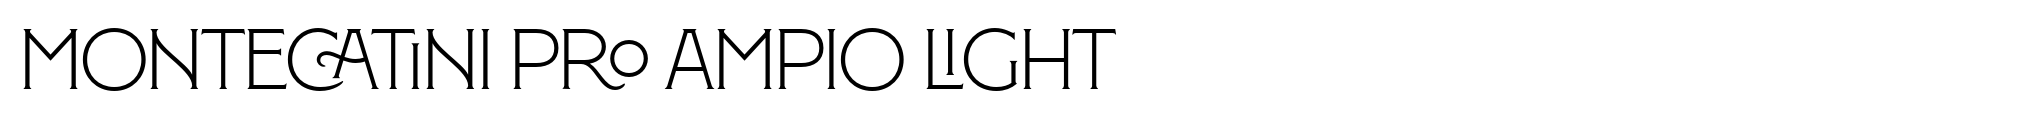 Montecatini Pro Ampio Light image